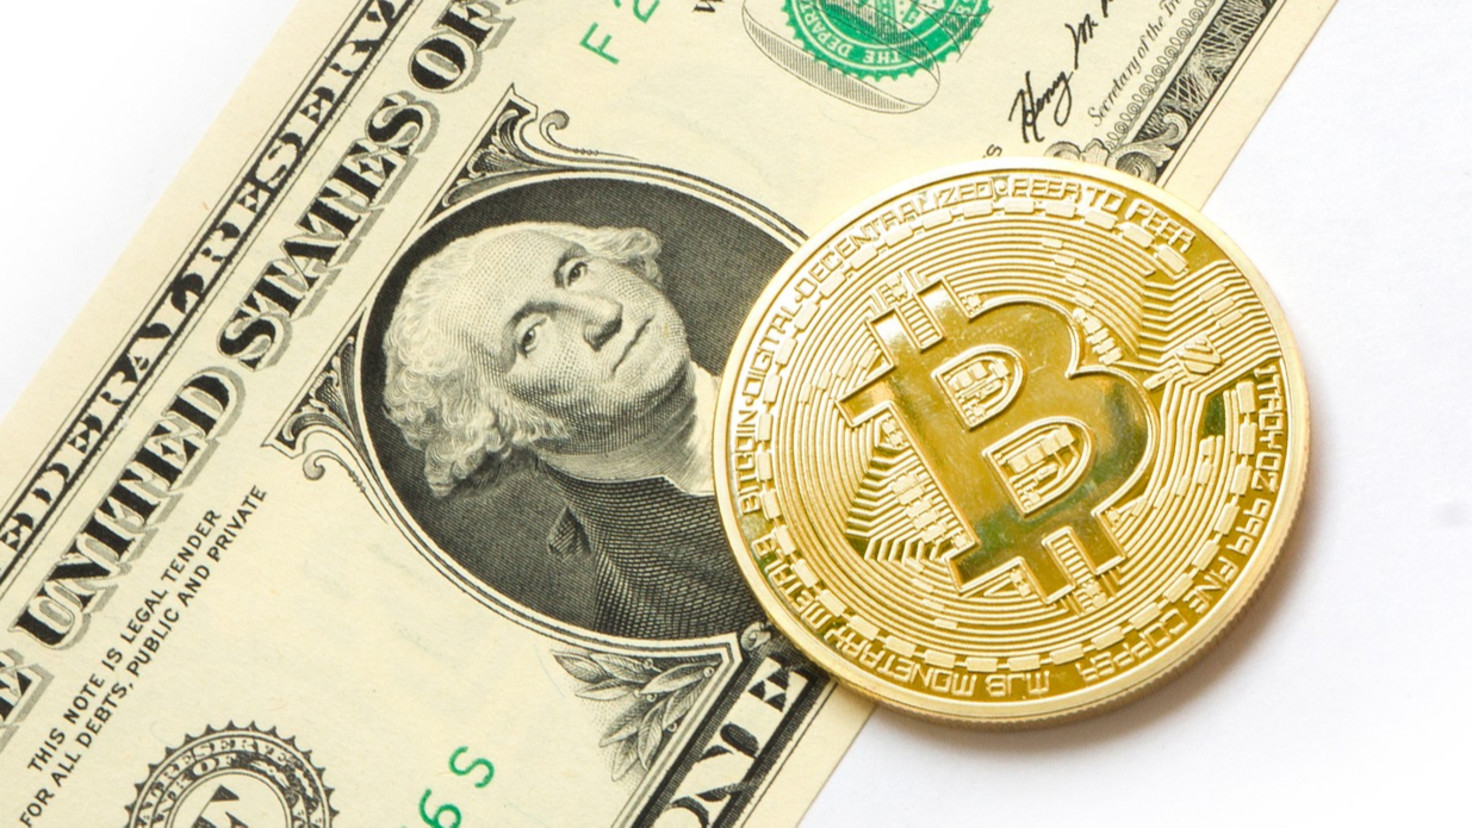 Bitcoin blockchain reaches $1bn in all-time transaction fees